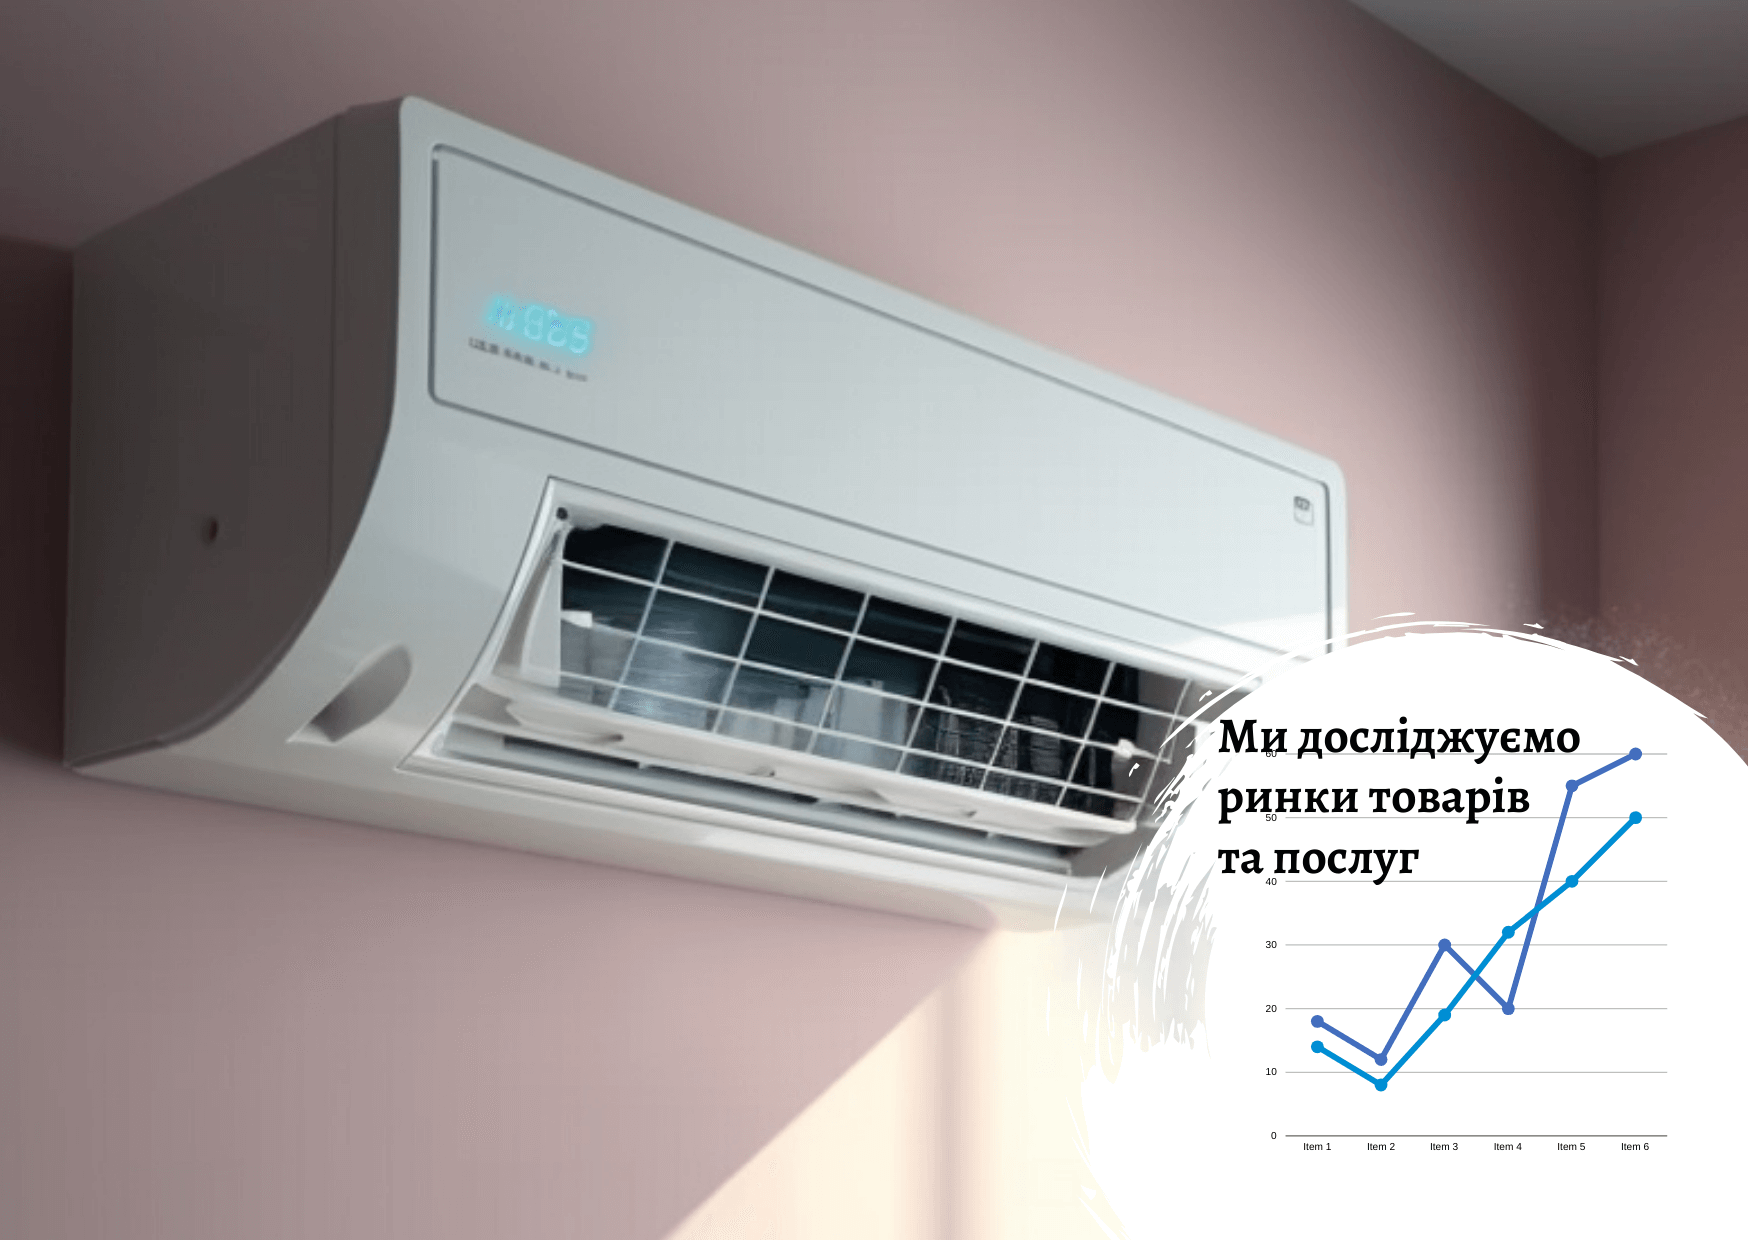 Ukrainian air conditioning equipment market: consumer choice 